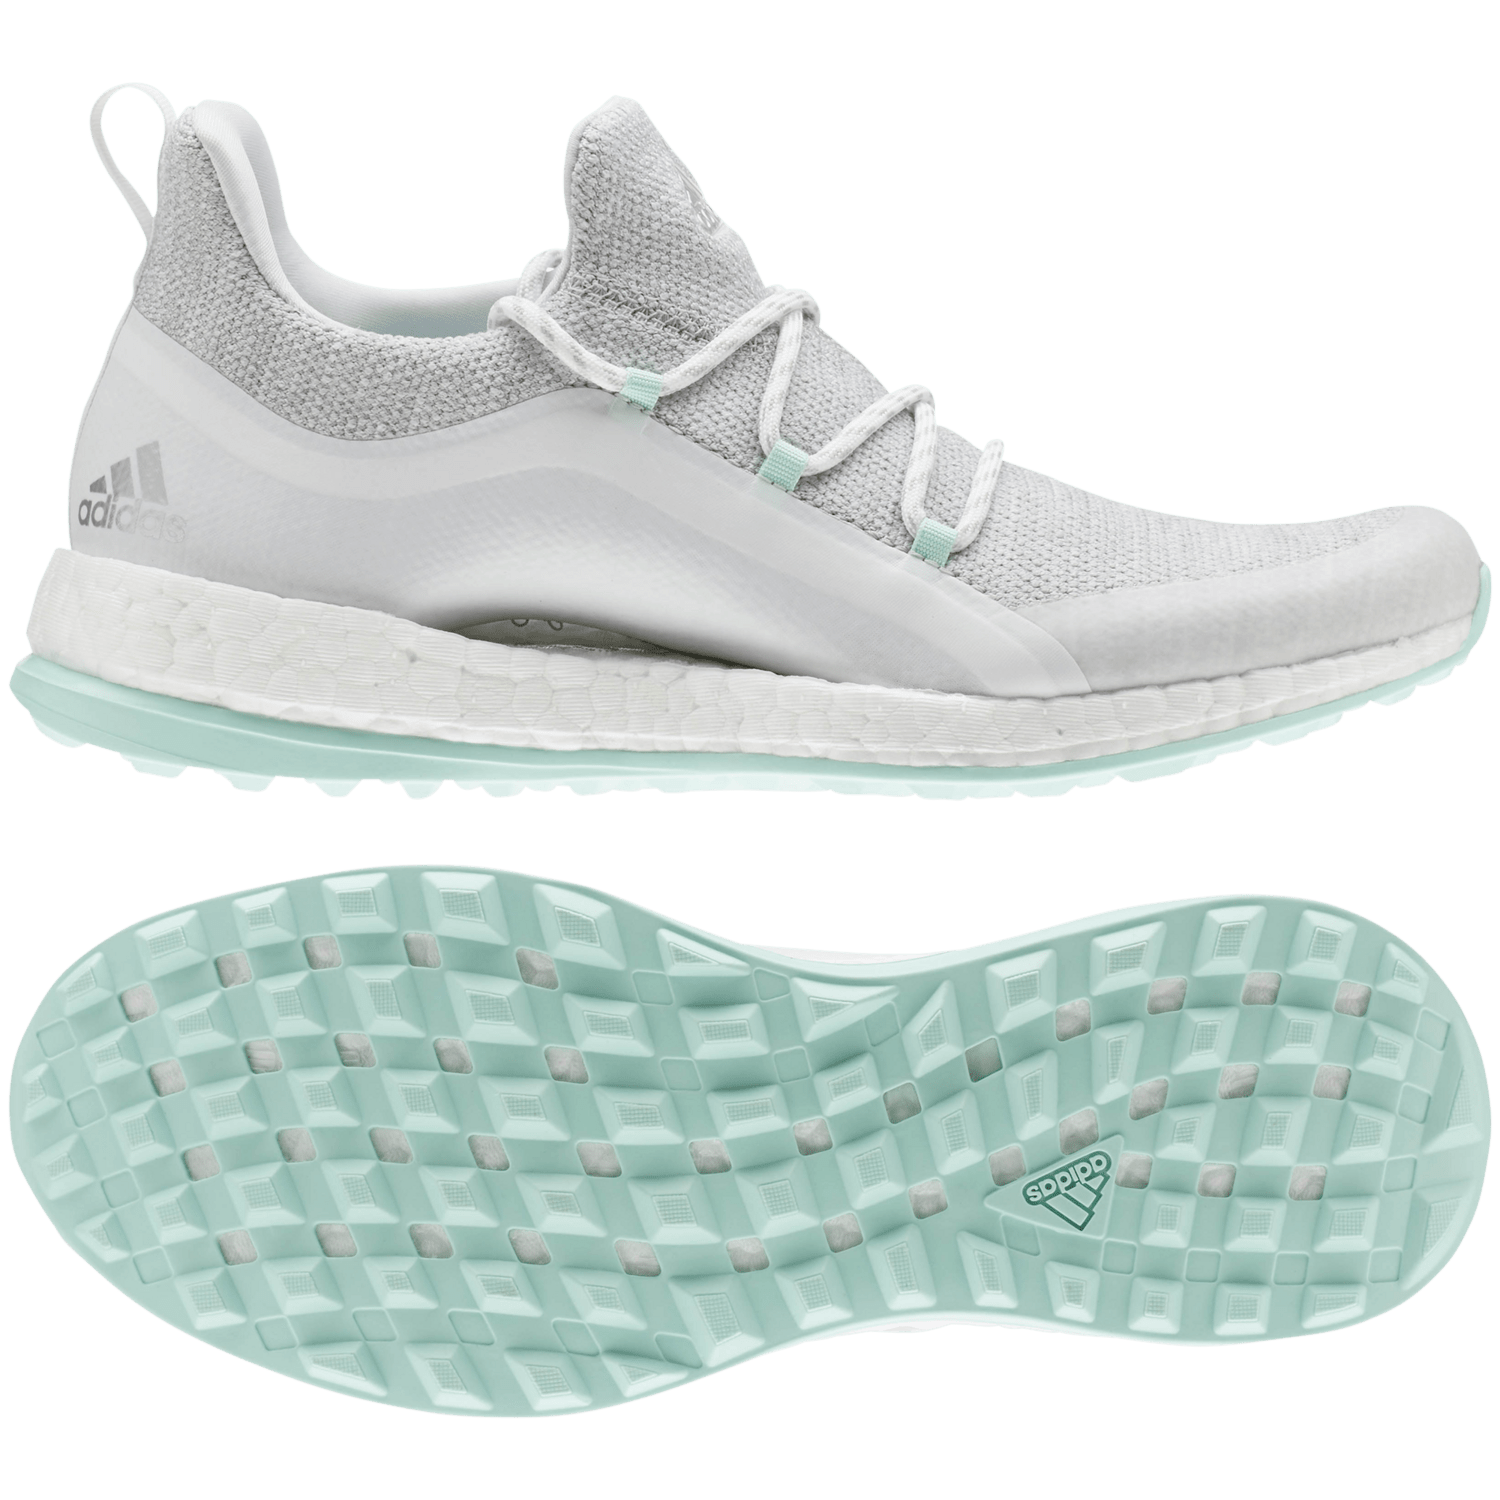 adidas women's pureboost golf shoes